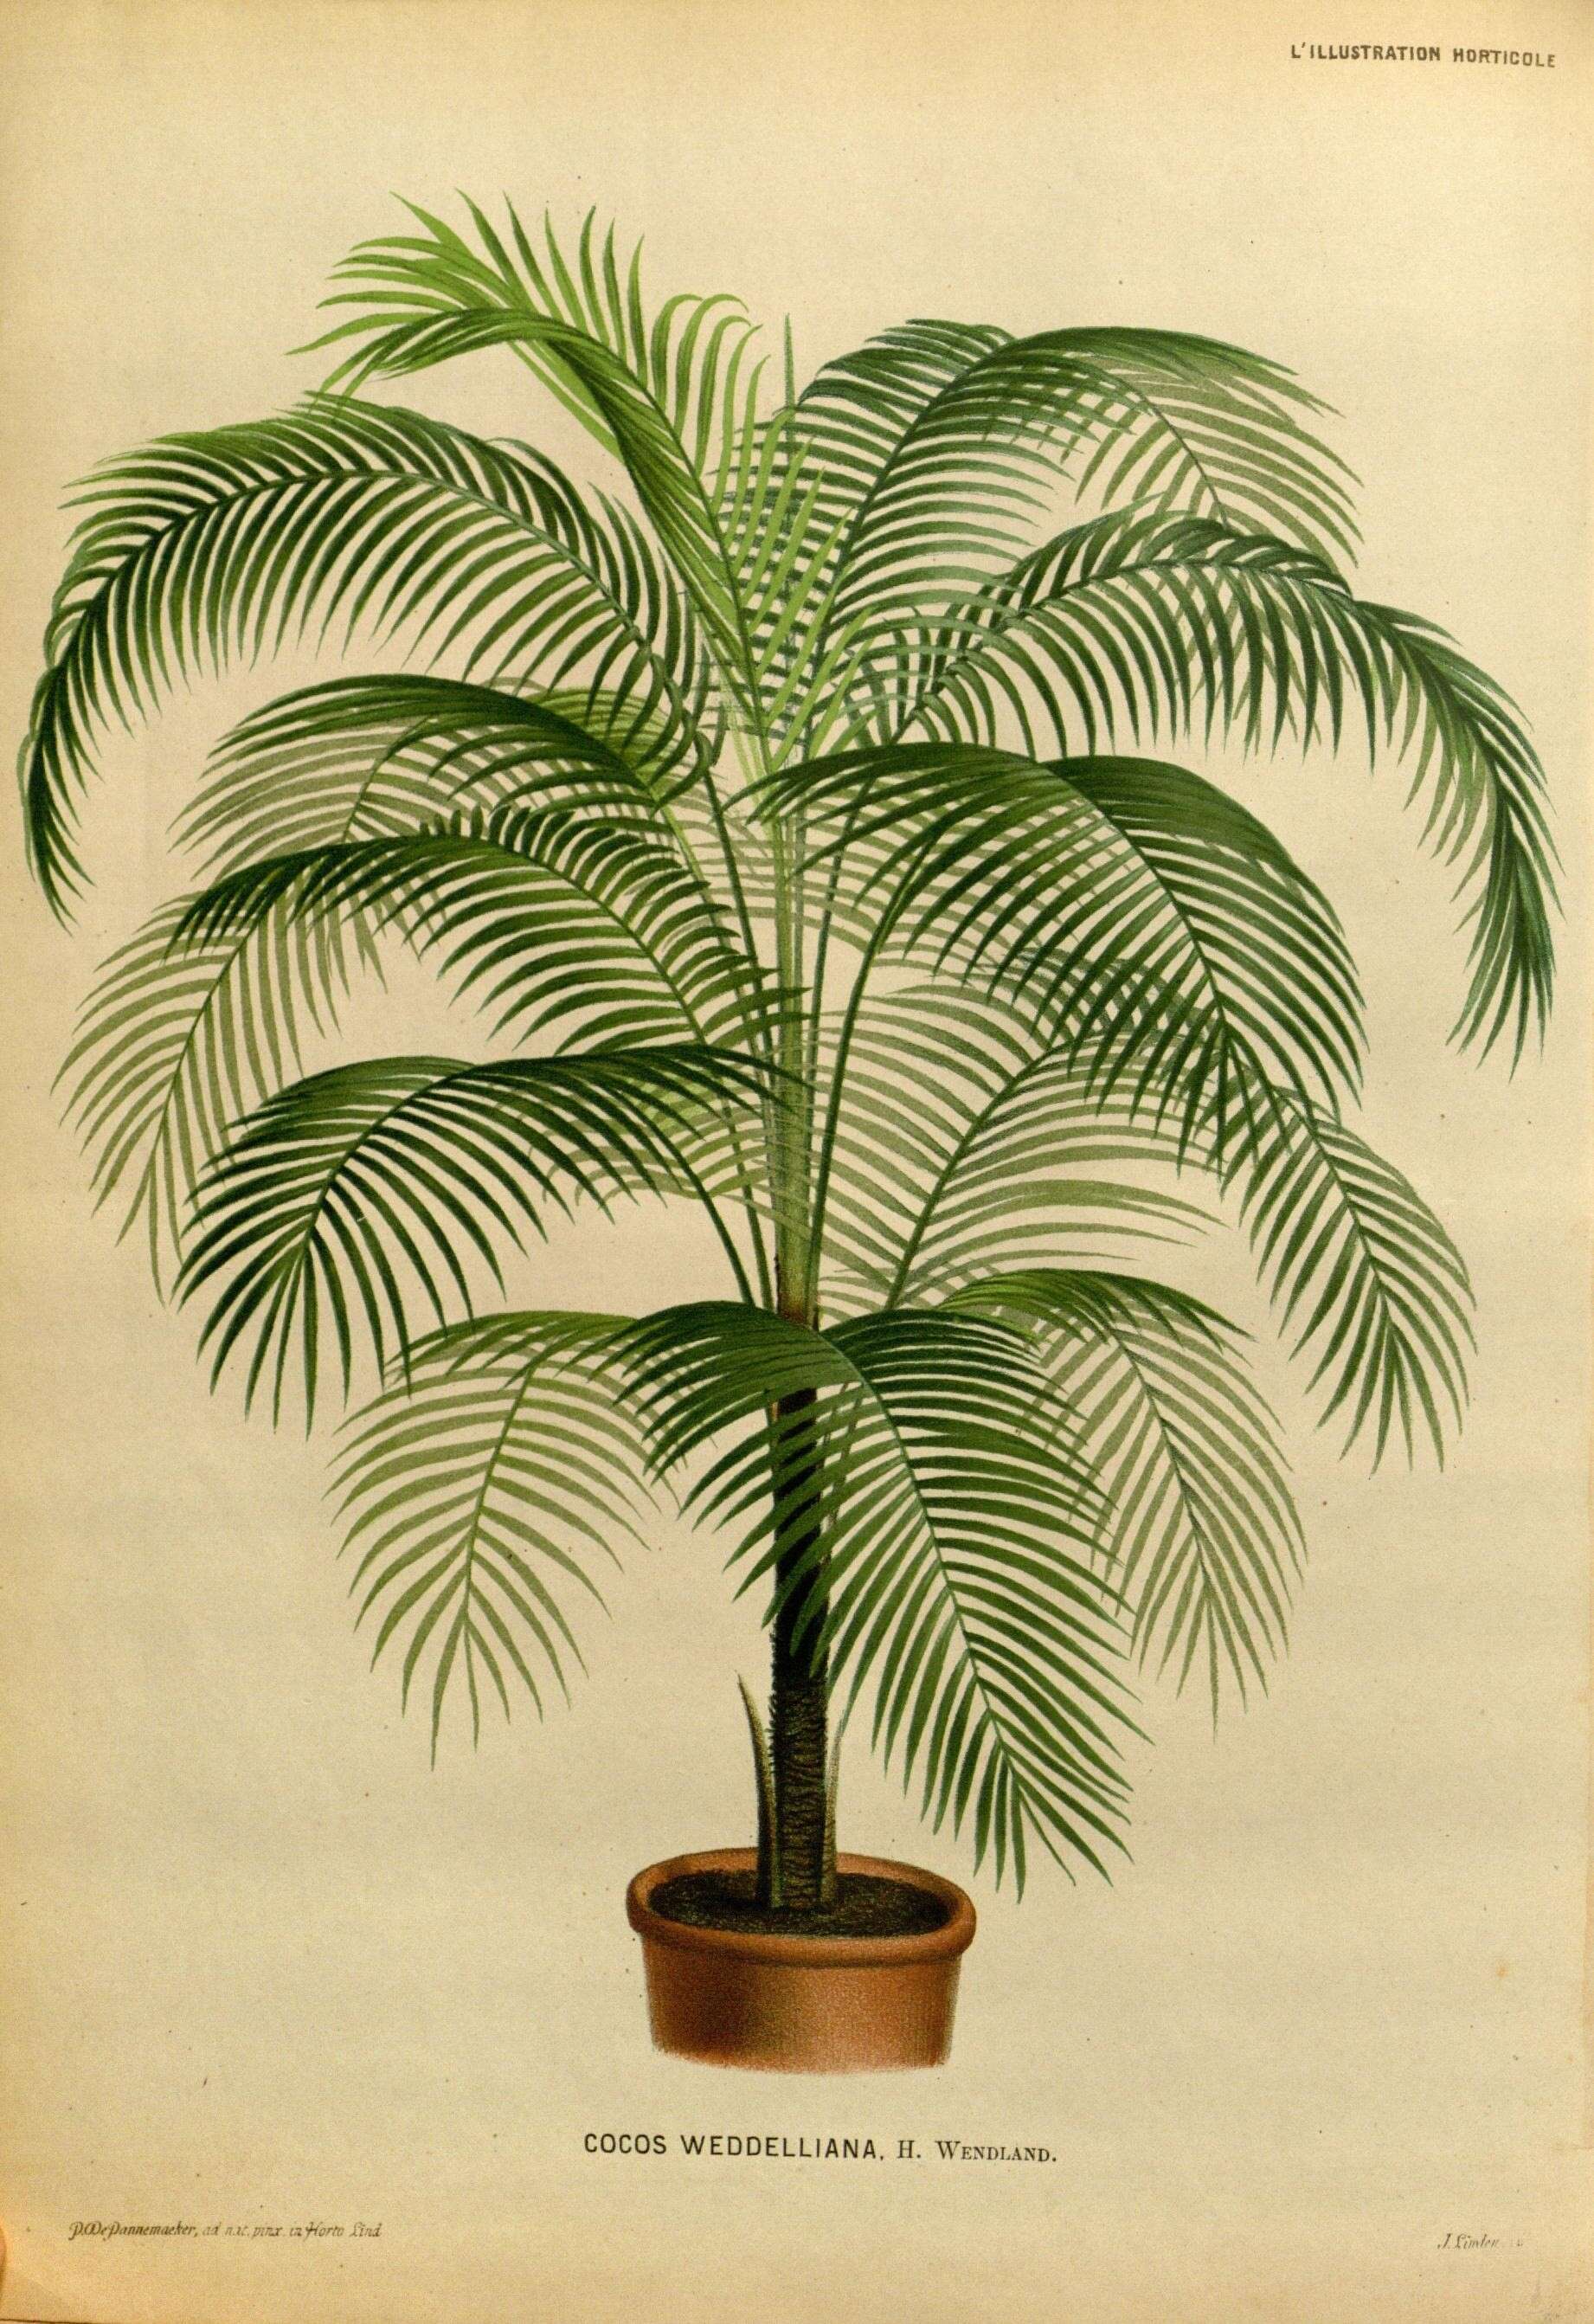 Image of miniature coconut palm